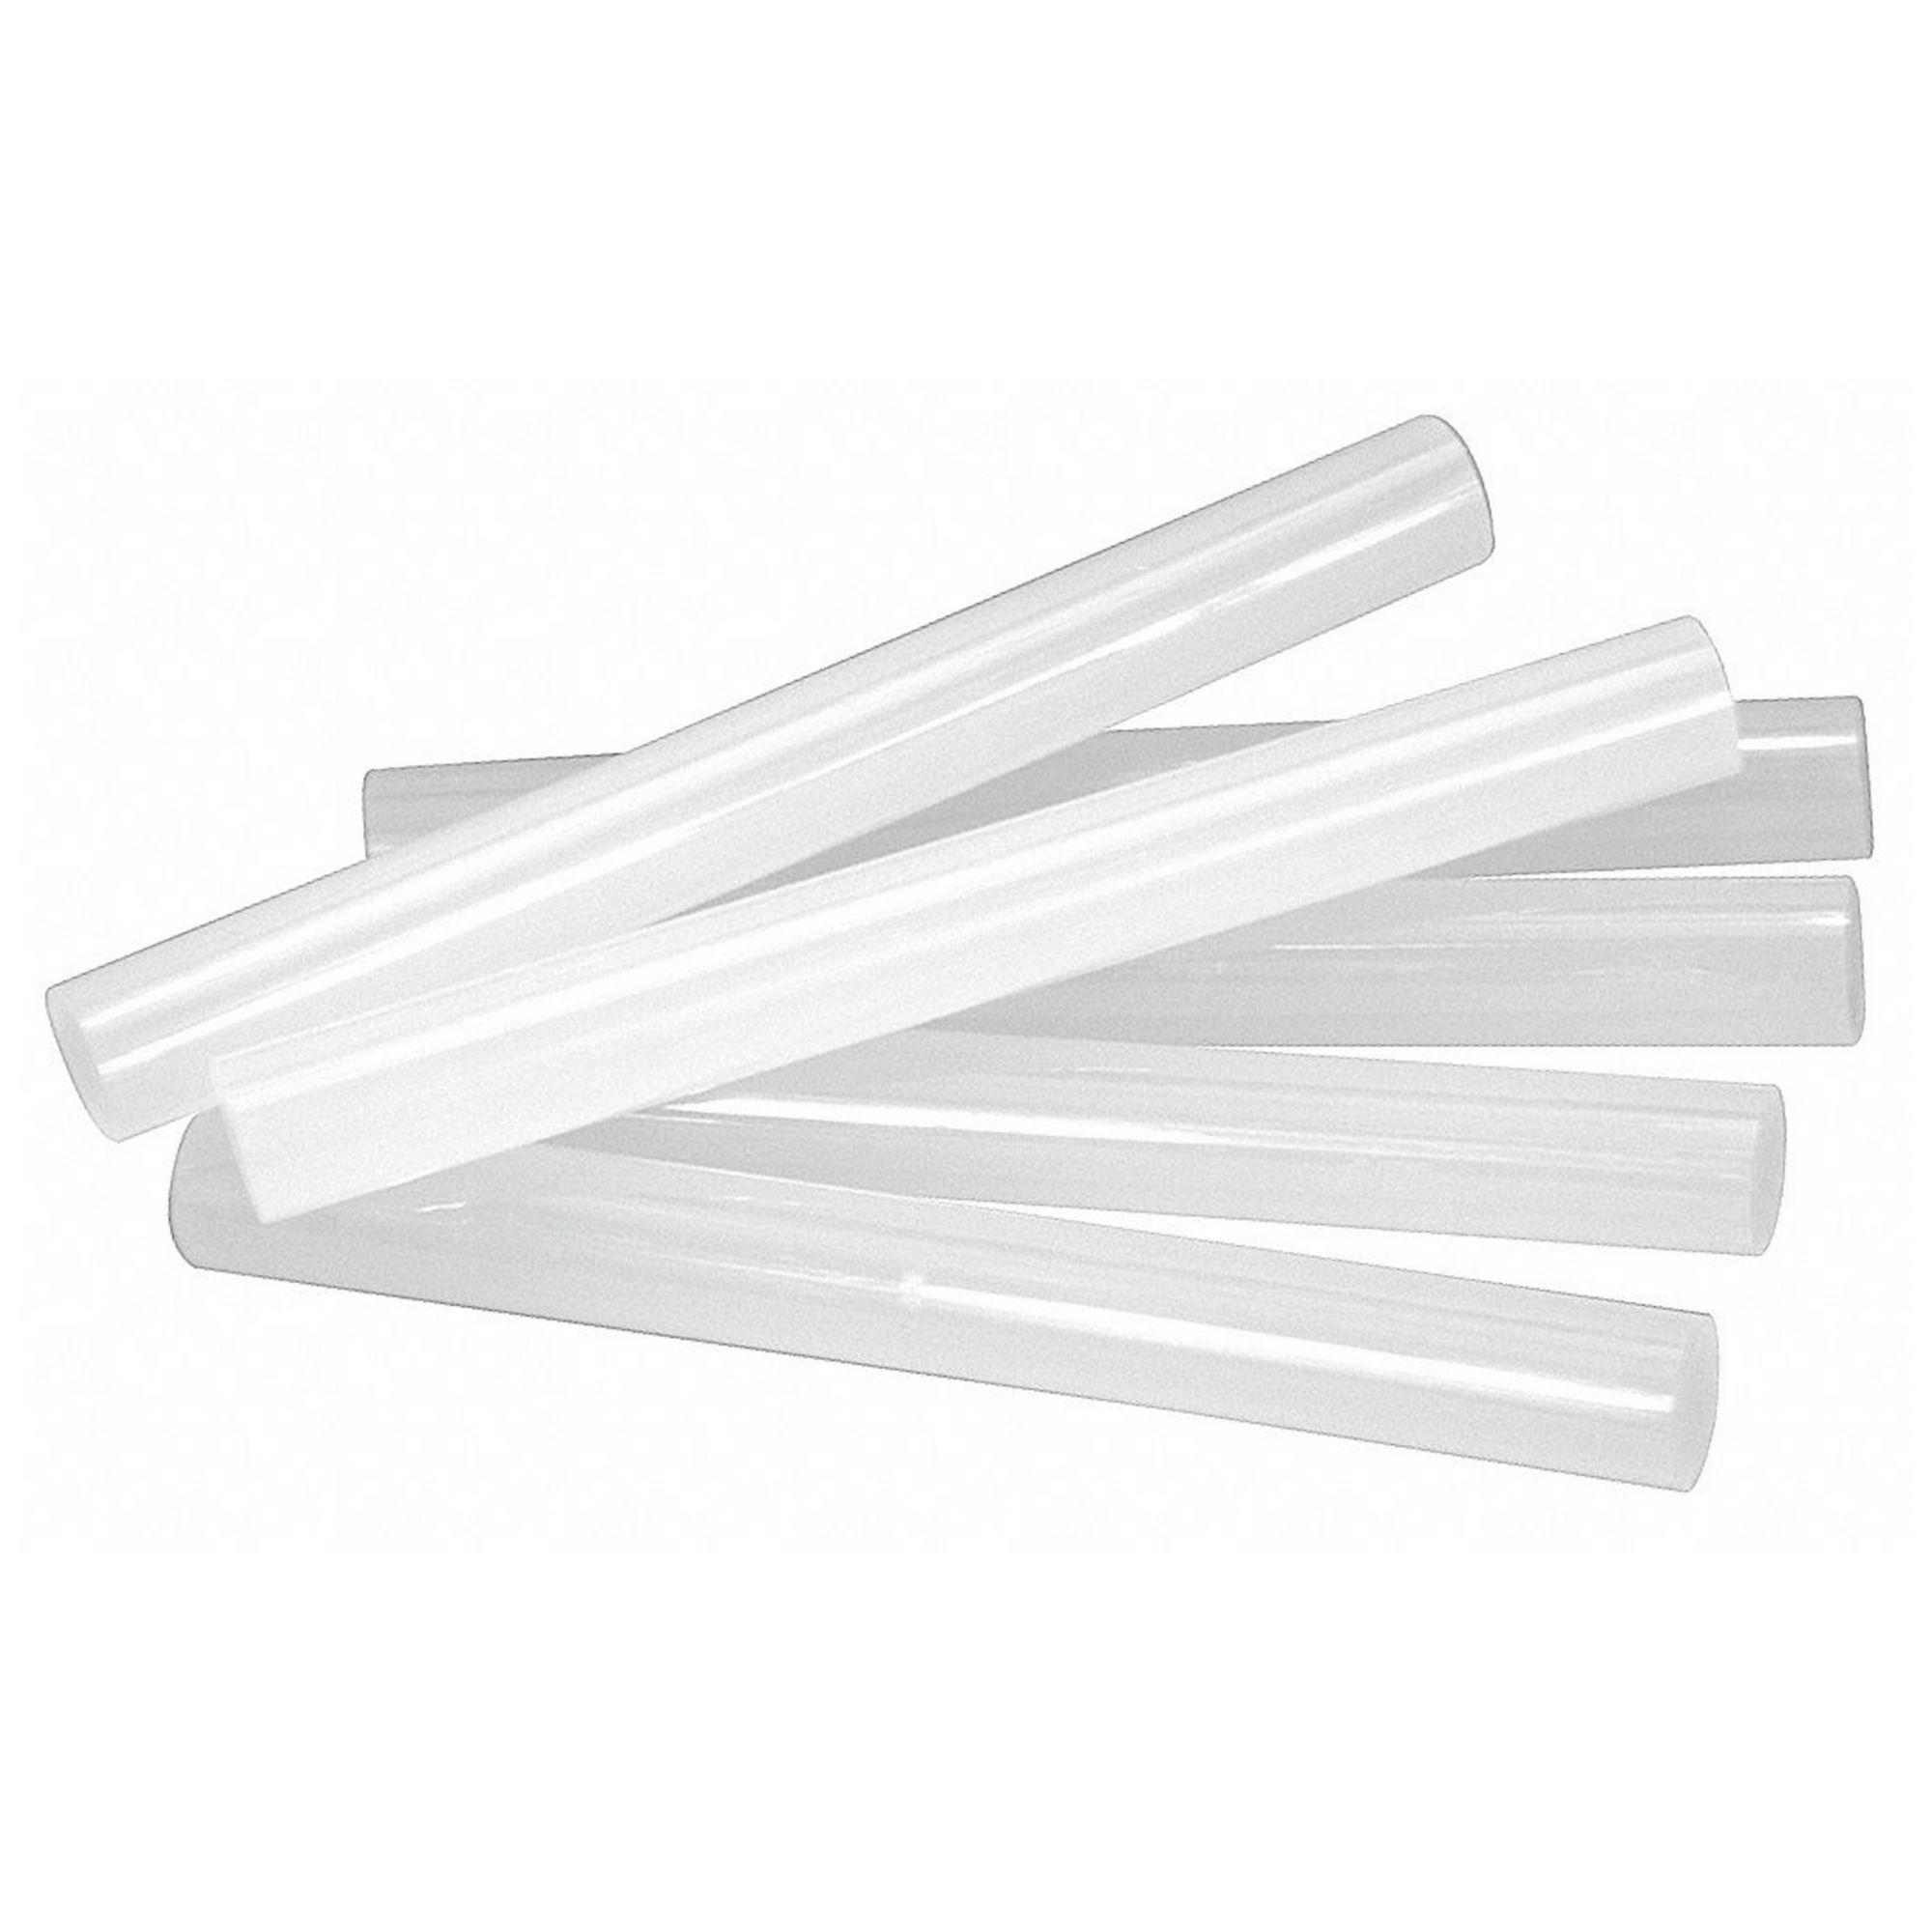 707R54 7/16 x 4 Clear High Performance Hot Melt Glue Sticks